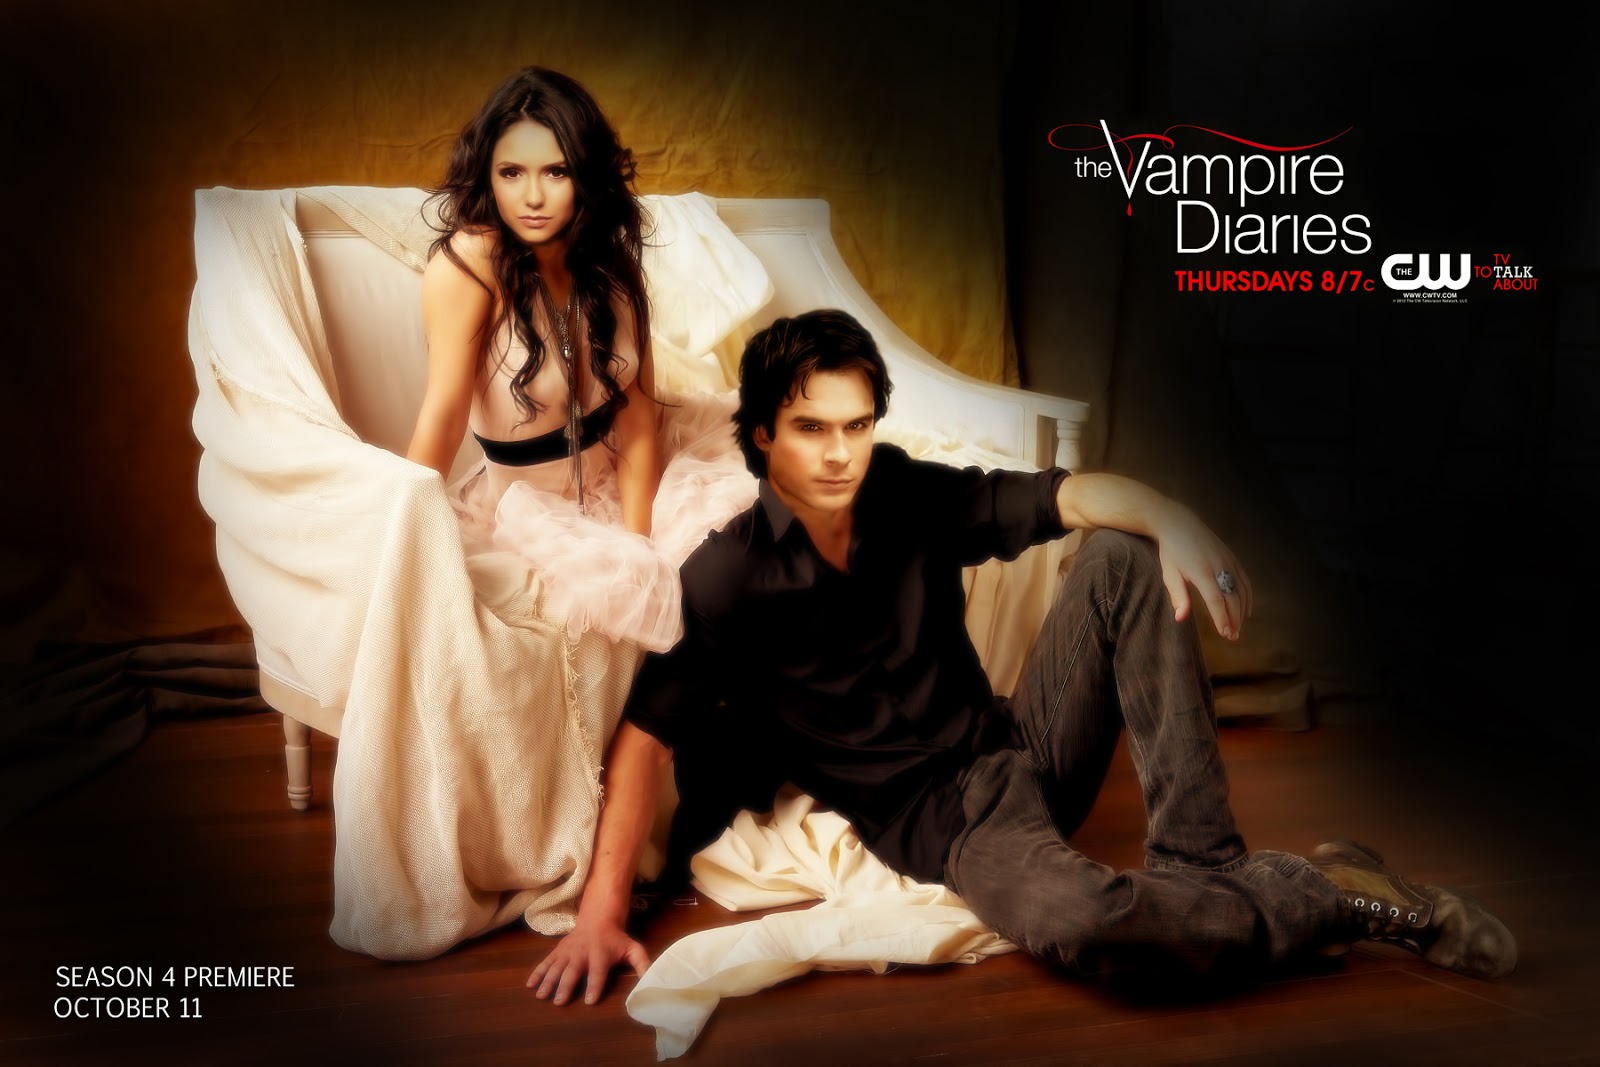 http://3.bp.blogspot.com/-1hFZ6gu0JlM/UHb4hKyqVJI/AAAAAAAABkA/0bGaqOhF4kY/s1600/The-Vampire-Diaries-Season-4-the-vampire-diaries-31725106-1800-12001.jpg